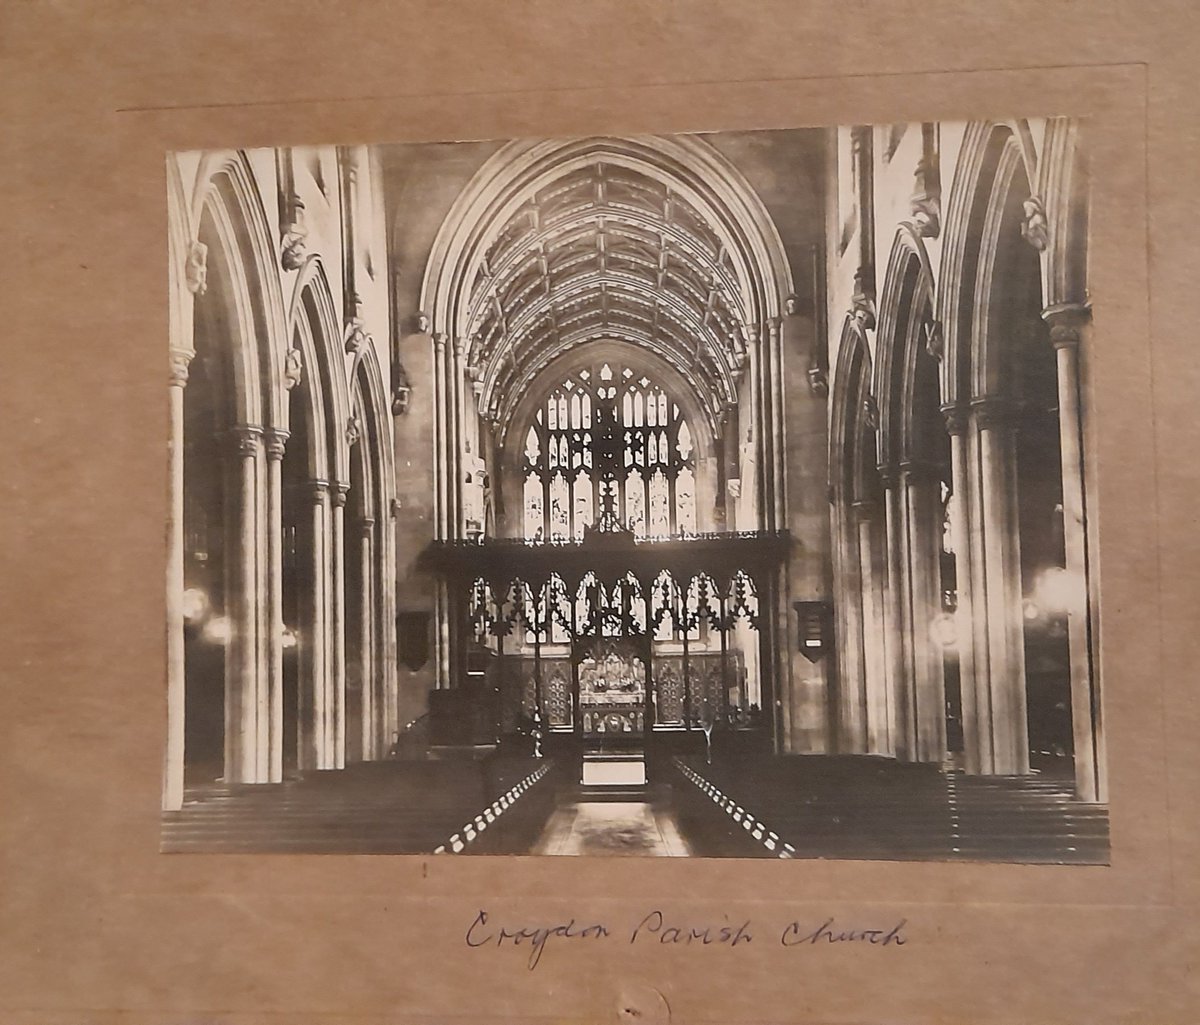 From the archives @croydonminster, a photo of the interior of the church 1939 @TonyFosw @MuseumOfCroydon @InsideCroydon @SouthwarkCofE